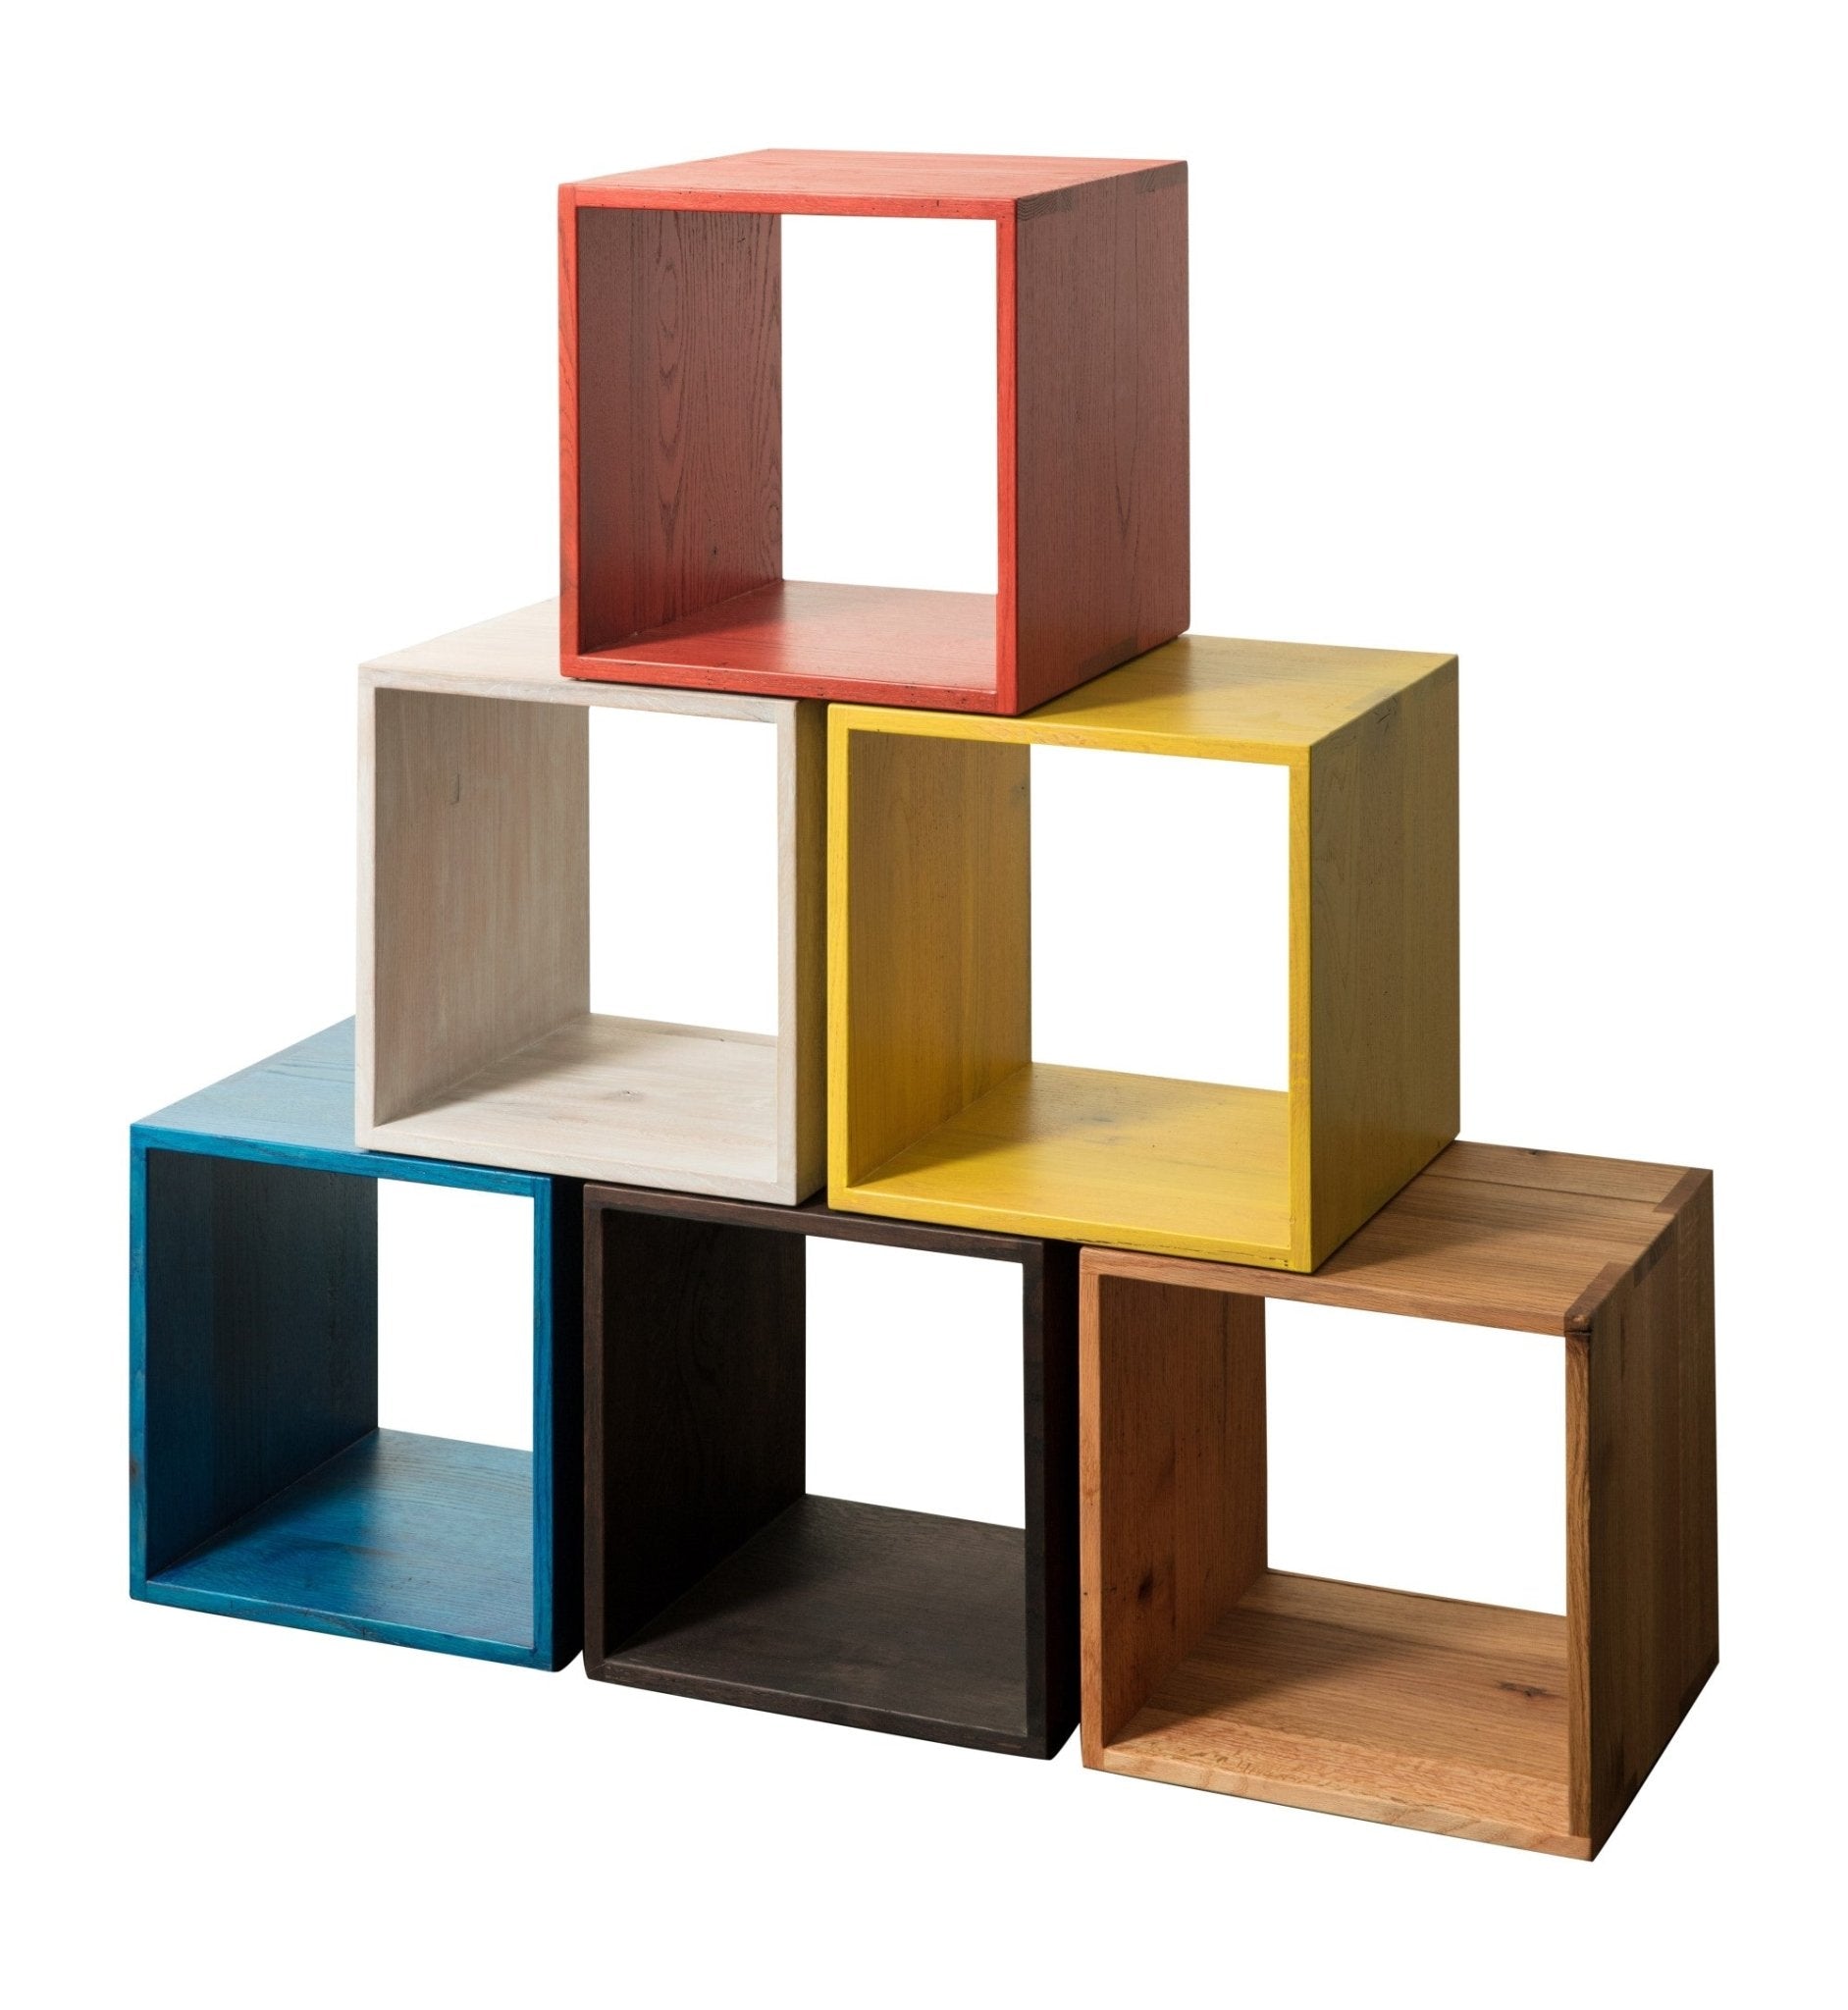 Work-it! Modular Cube Storage Organizer | Set of 6 Cubes, Black